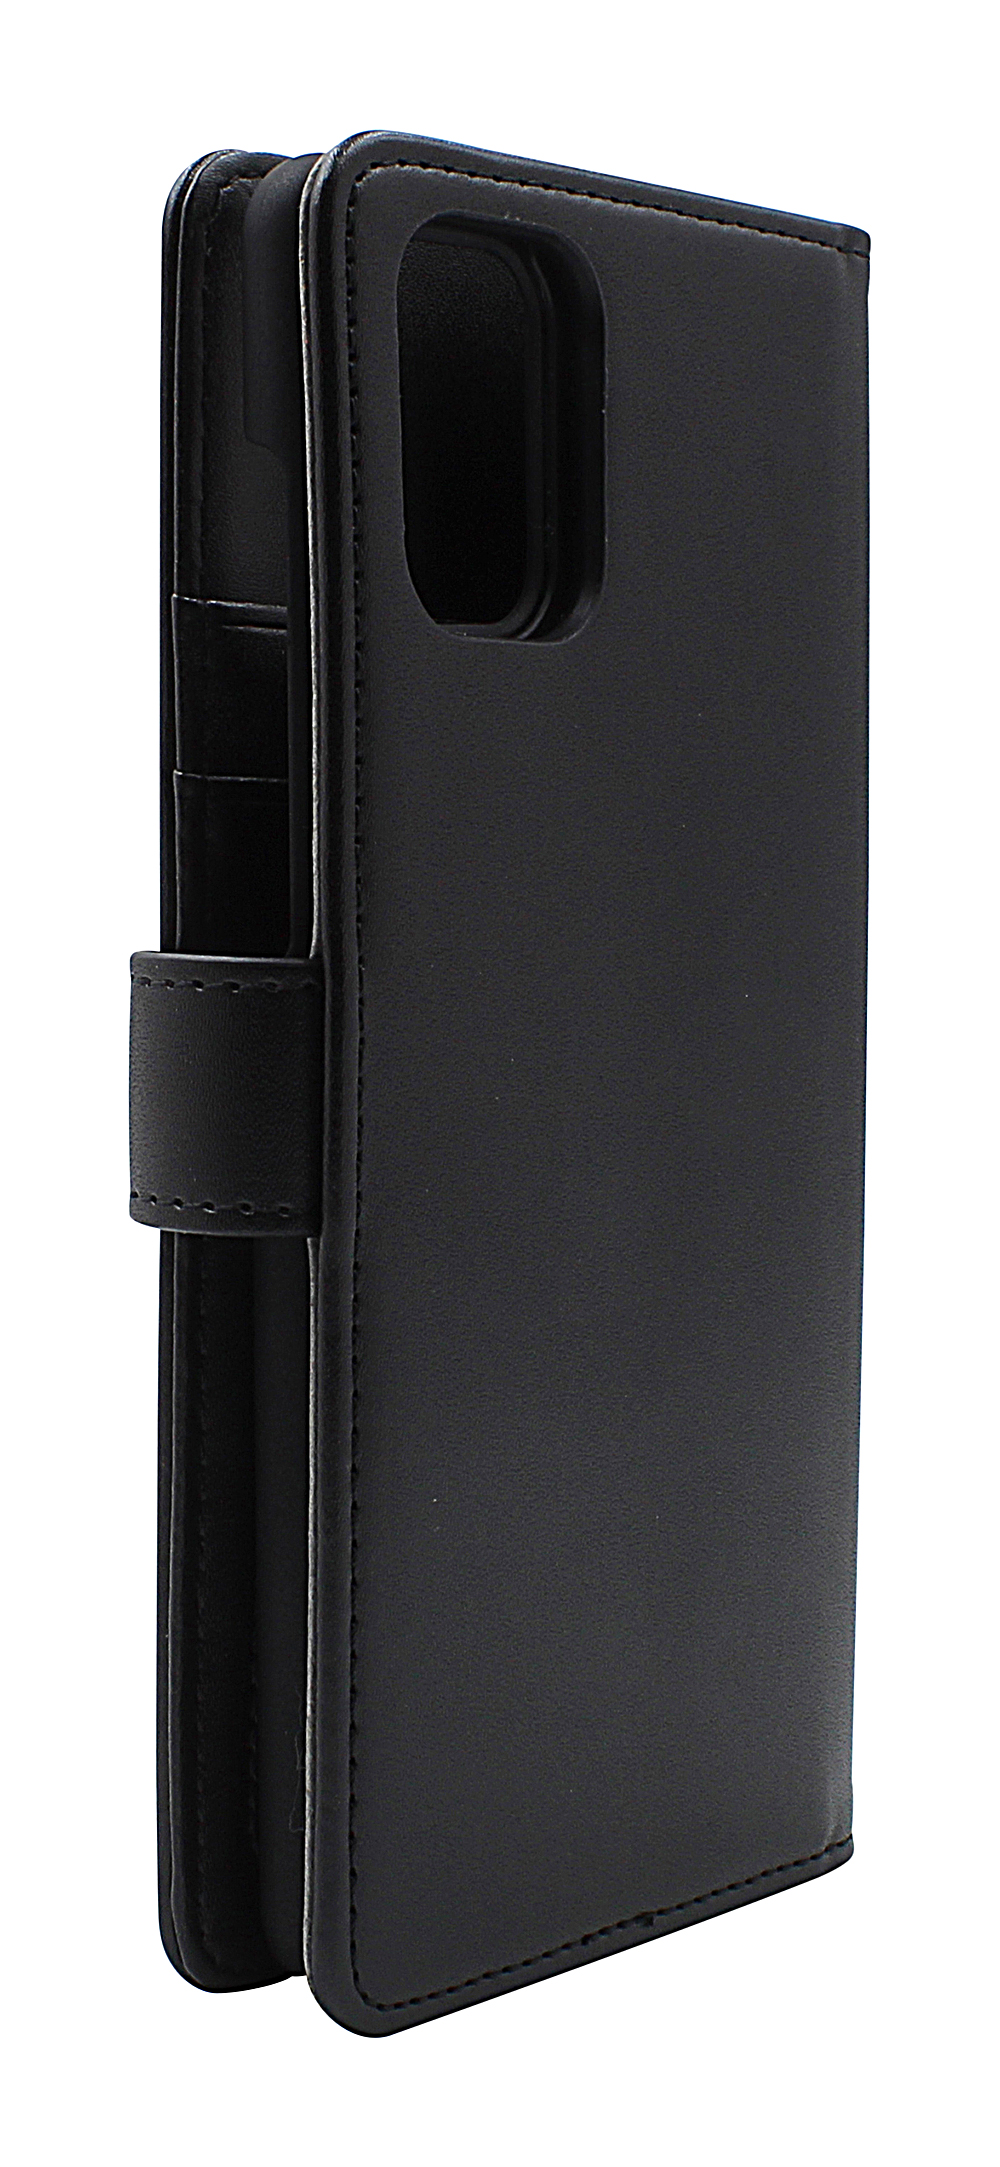 CoverInSkimblocker Magnet Fodral Samsung Galaxy A71 (A715F/DS)